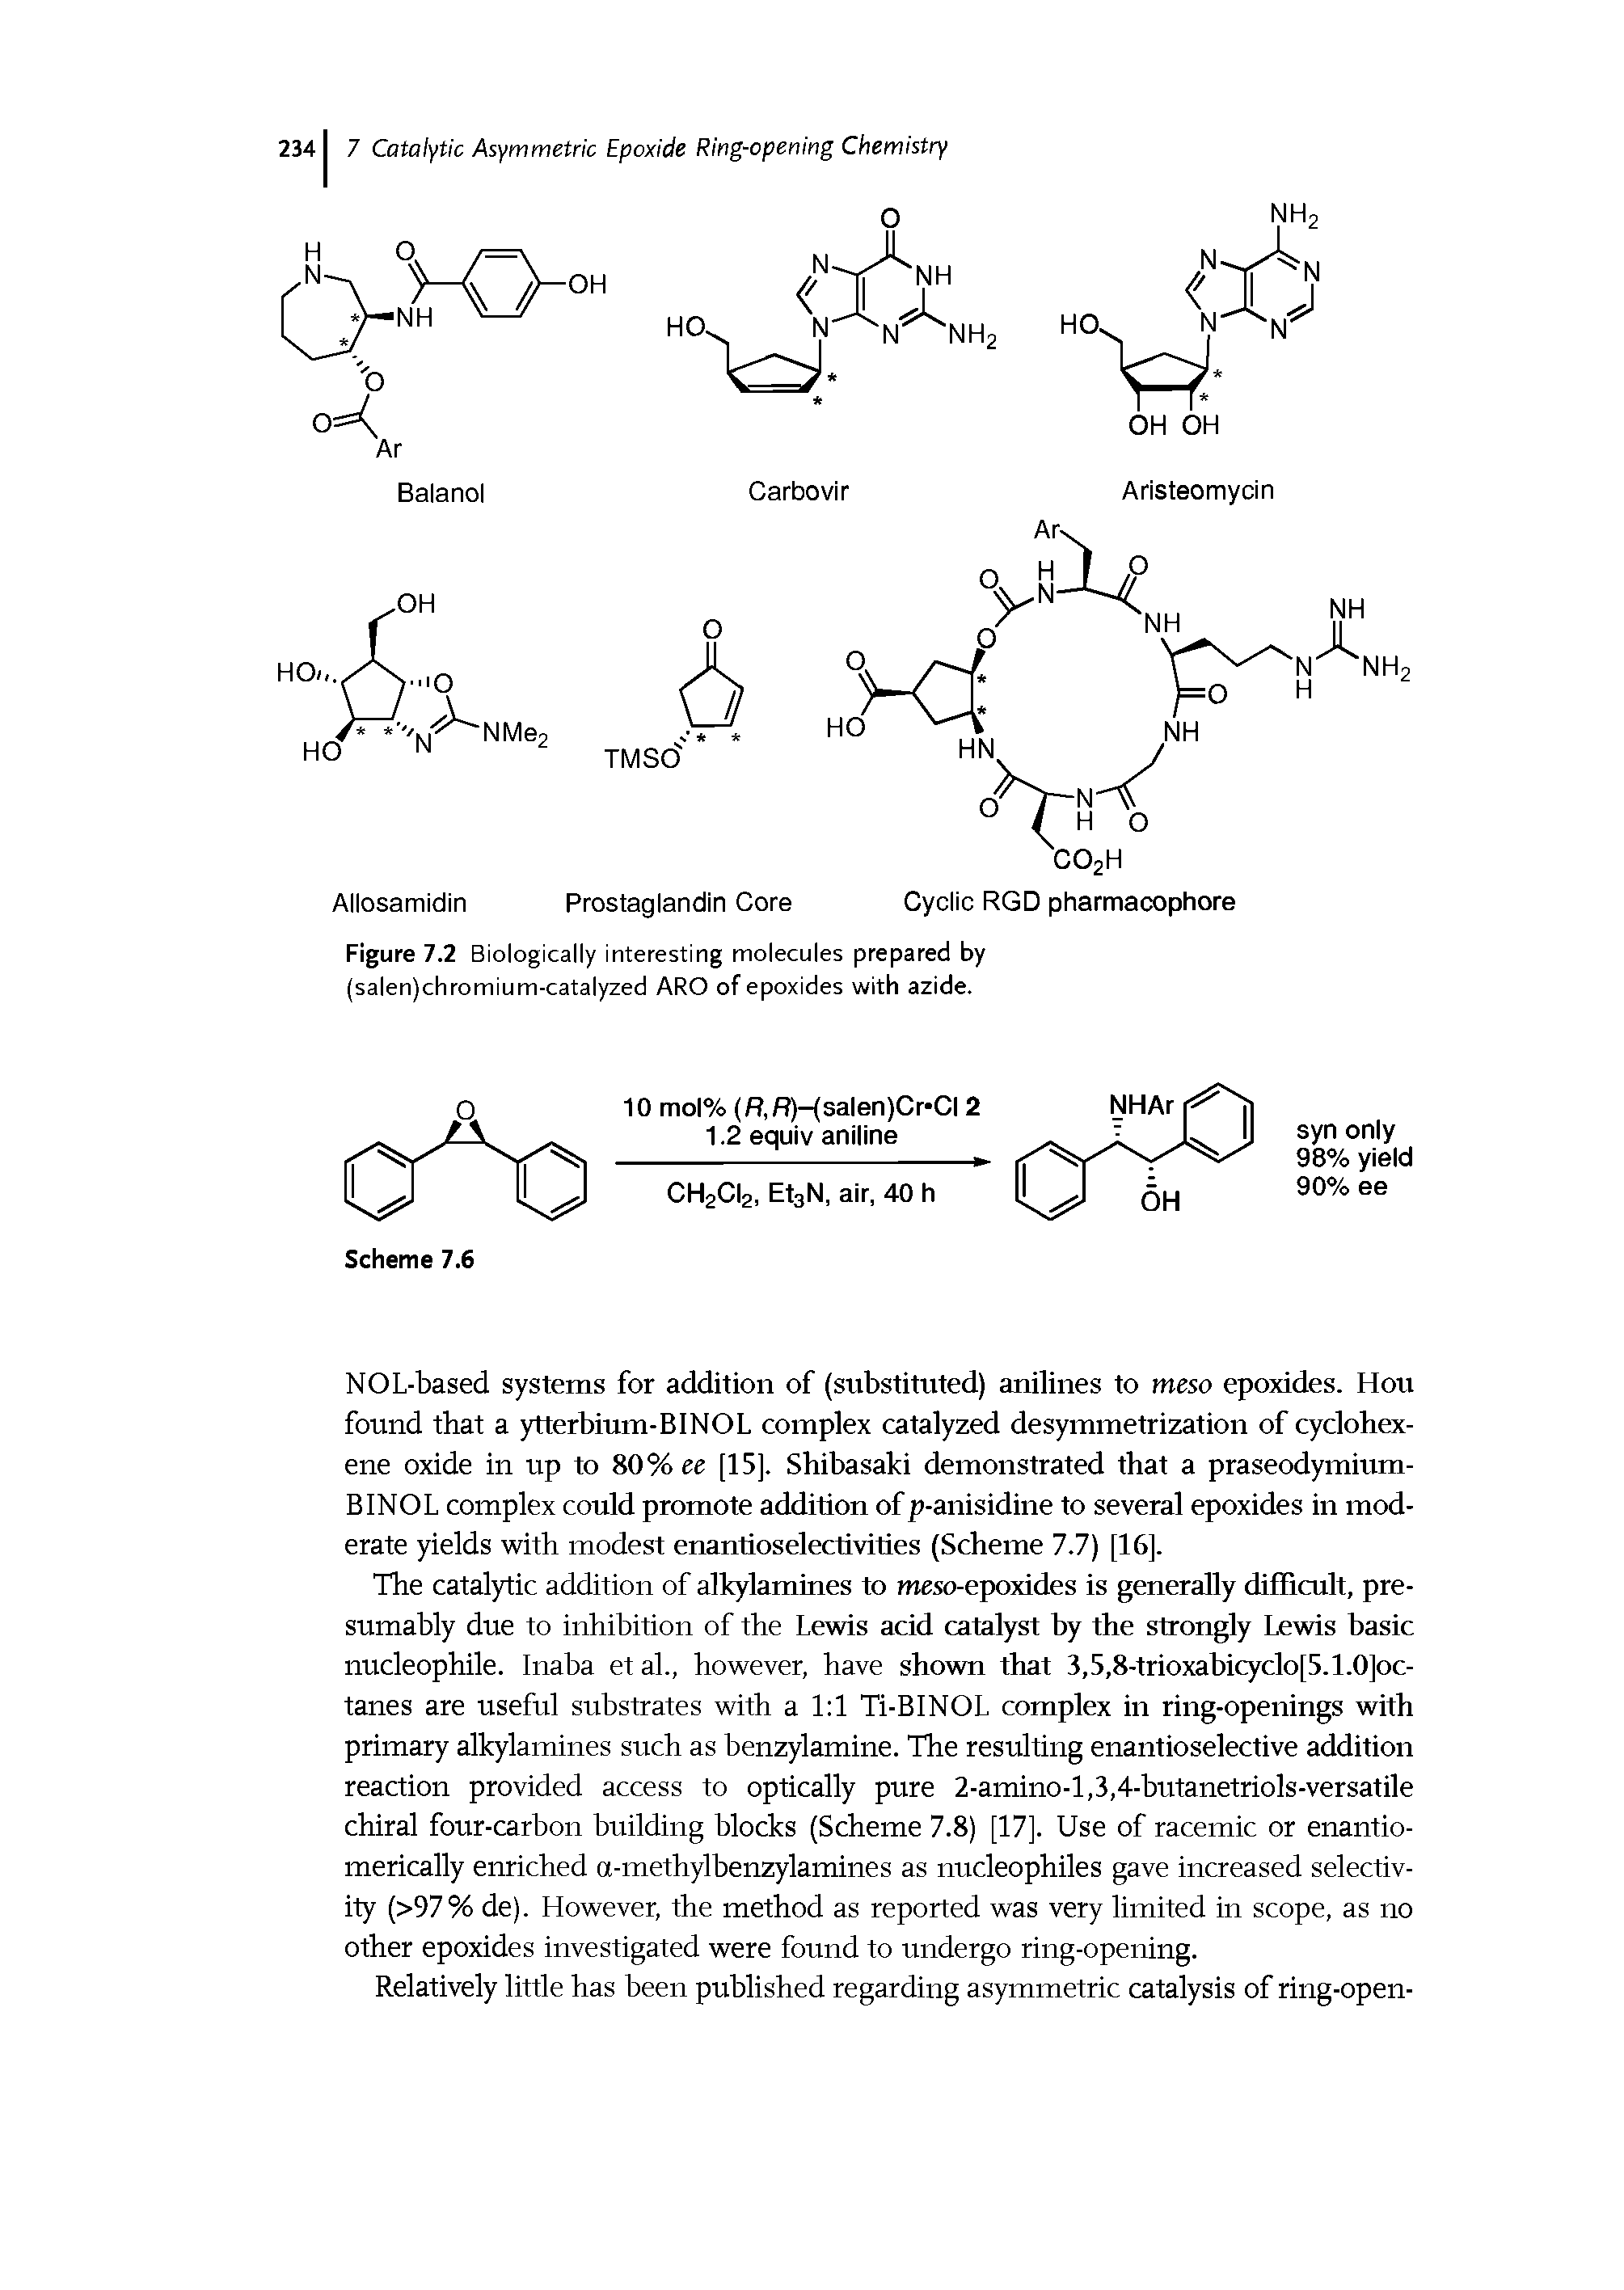 Figure 7.2 Biologically interesting molecules prepared by (salen)chromium-catalyzed ARO of epoxides with azide.